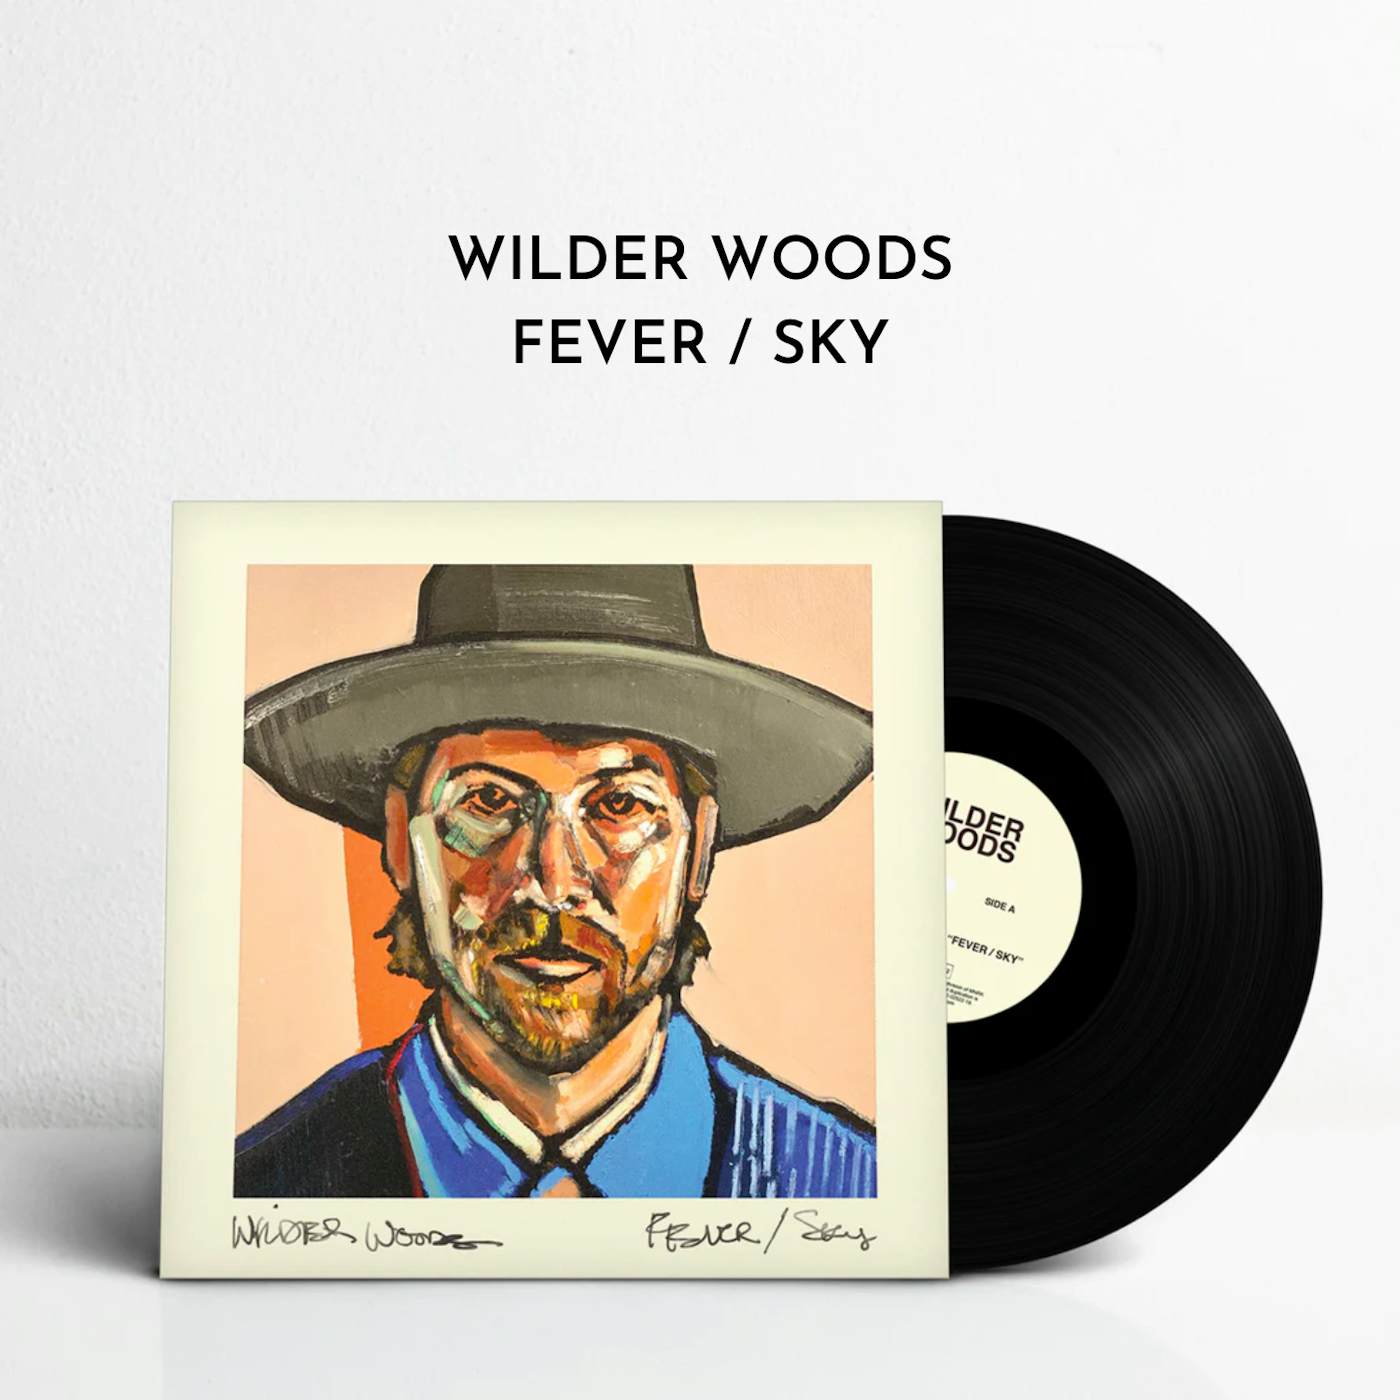 Wilder Woods FEVER / SKY (Vinyl)